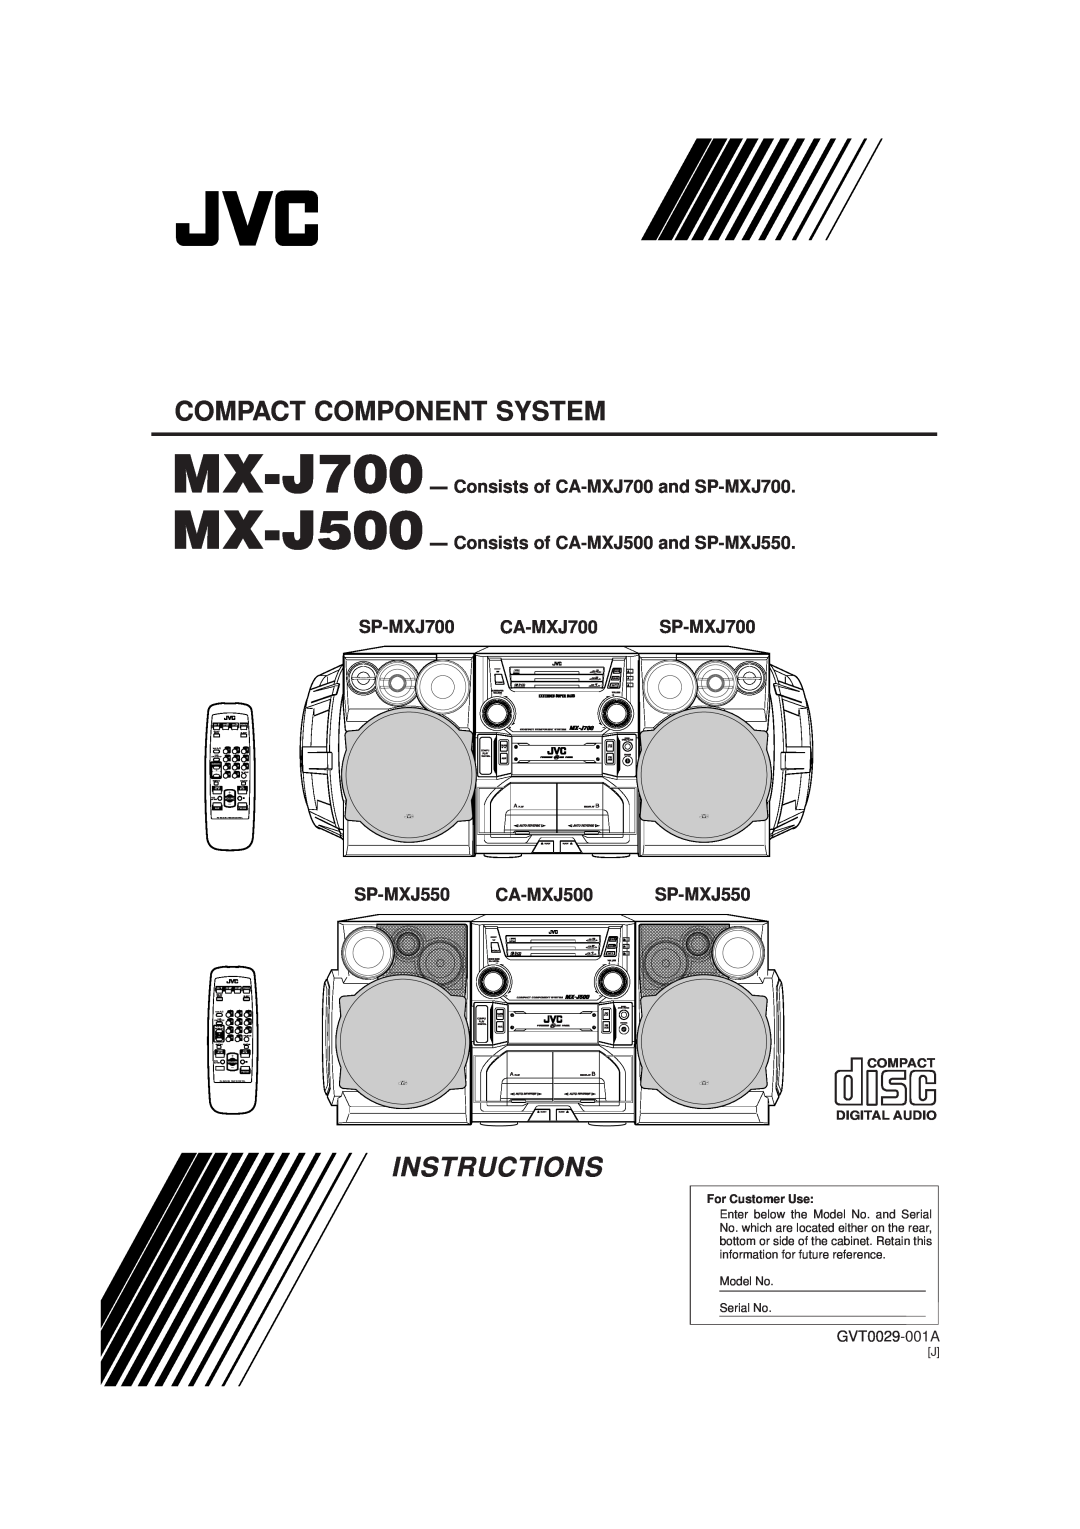 JVC SP-MXJ500 manual Compact Component System, Instructions, SP-MXJ700 SP-MXJ550, CA-MXJ700, CA-MXJ500, GVT0029-001A, Mode 